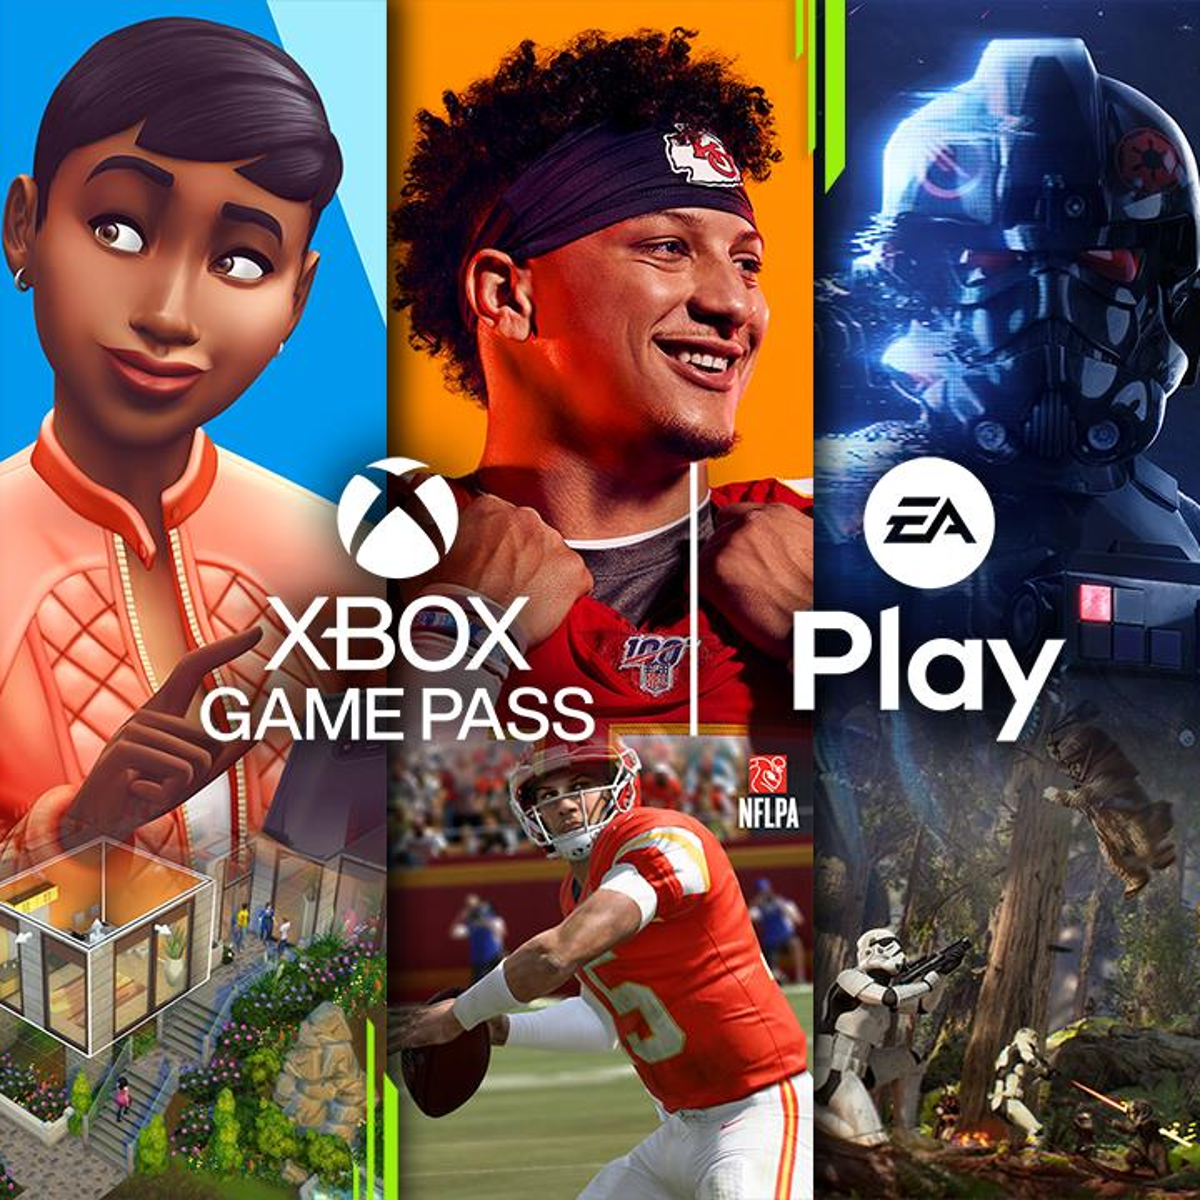 Xbox game pass ultimate для пк. Xbox game Pass Ultimate 4 месяца. Иксбокс гейм пасс ультимейт. Подписка Xbox game Pass. Xbox Ultimate Pass 1 месяц.